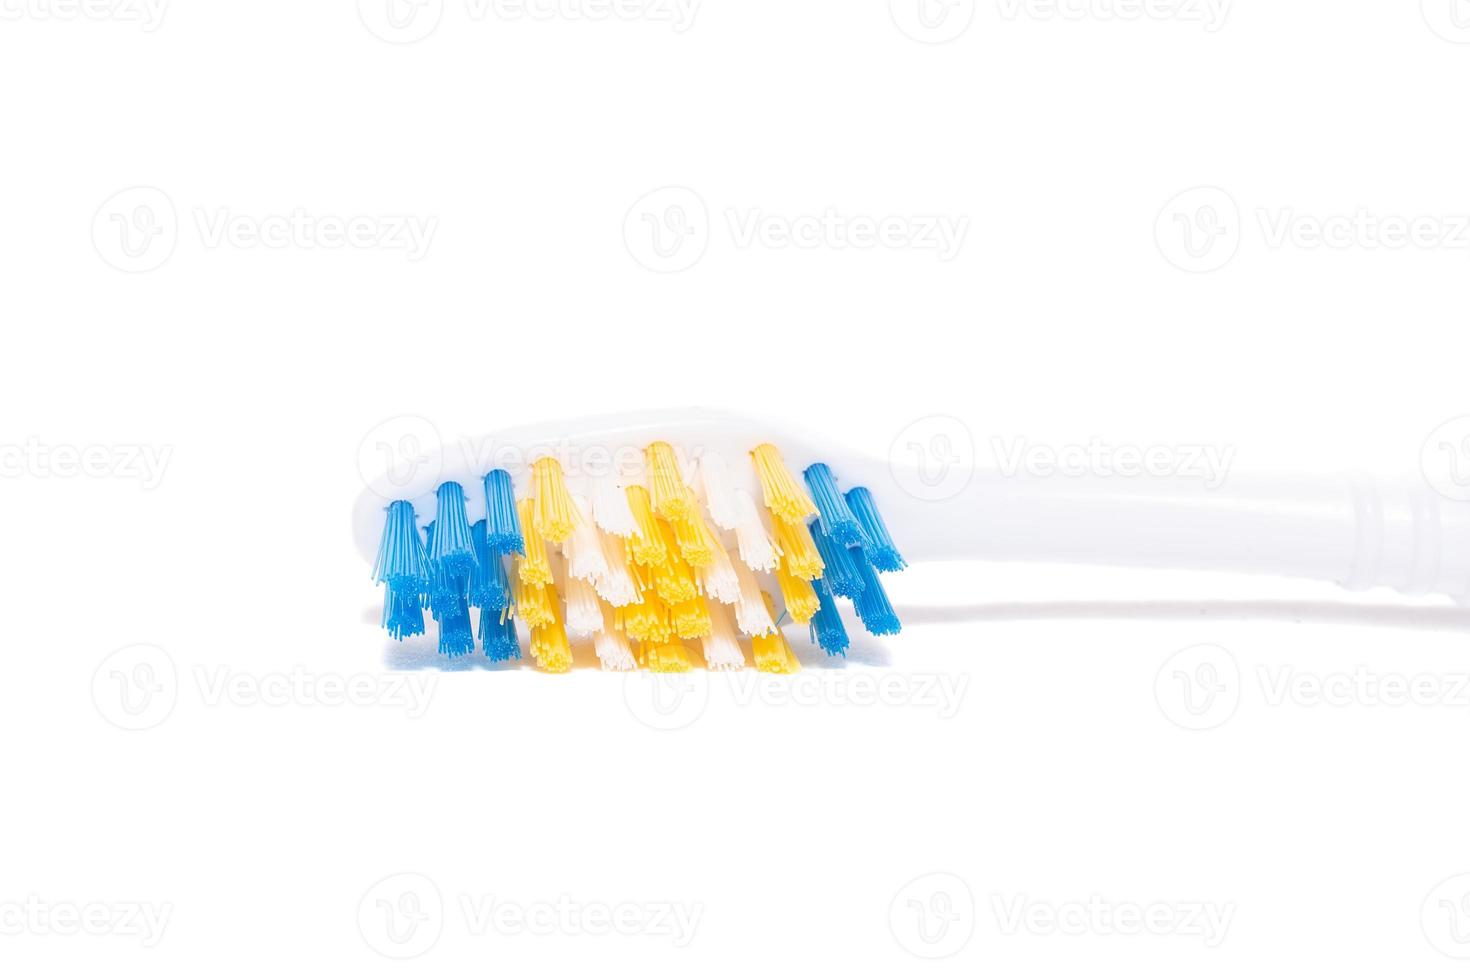 escova de dentes isolada no fundo branco foto